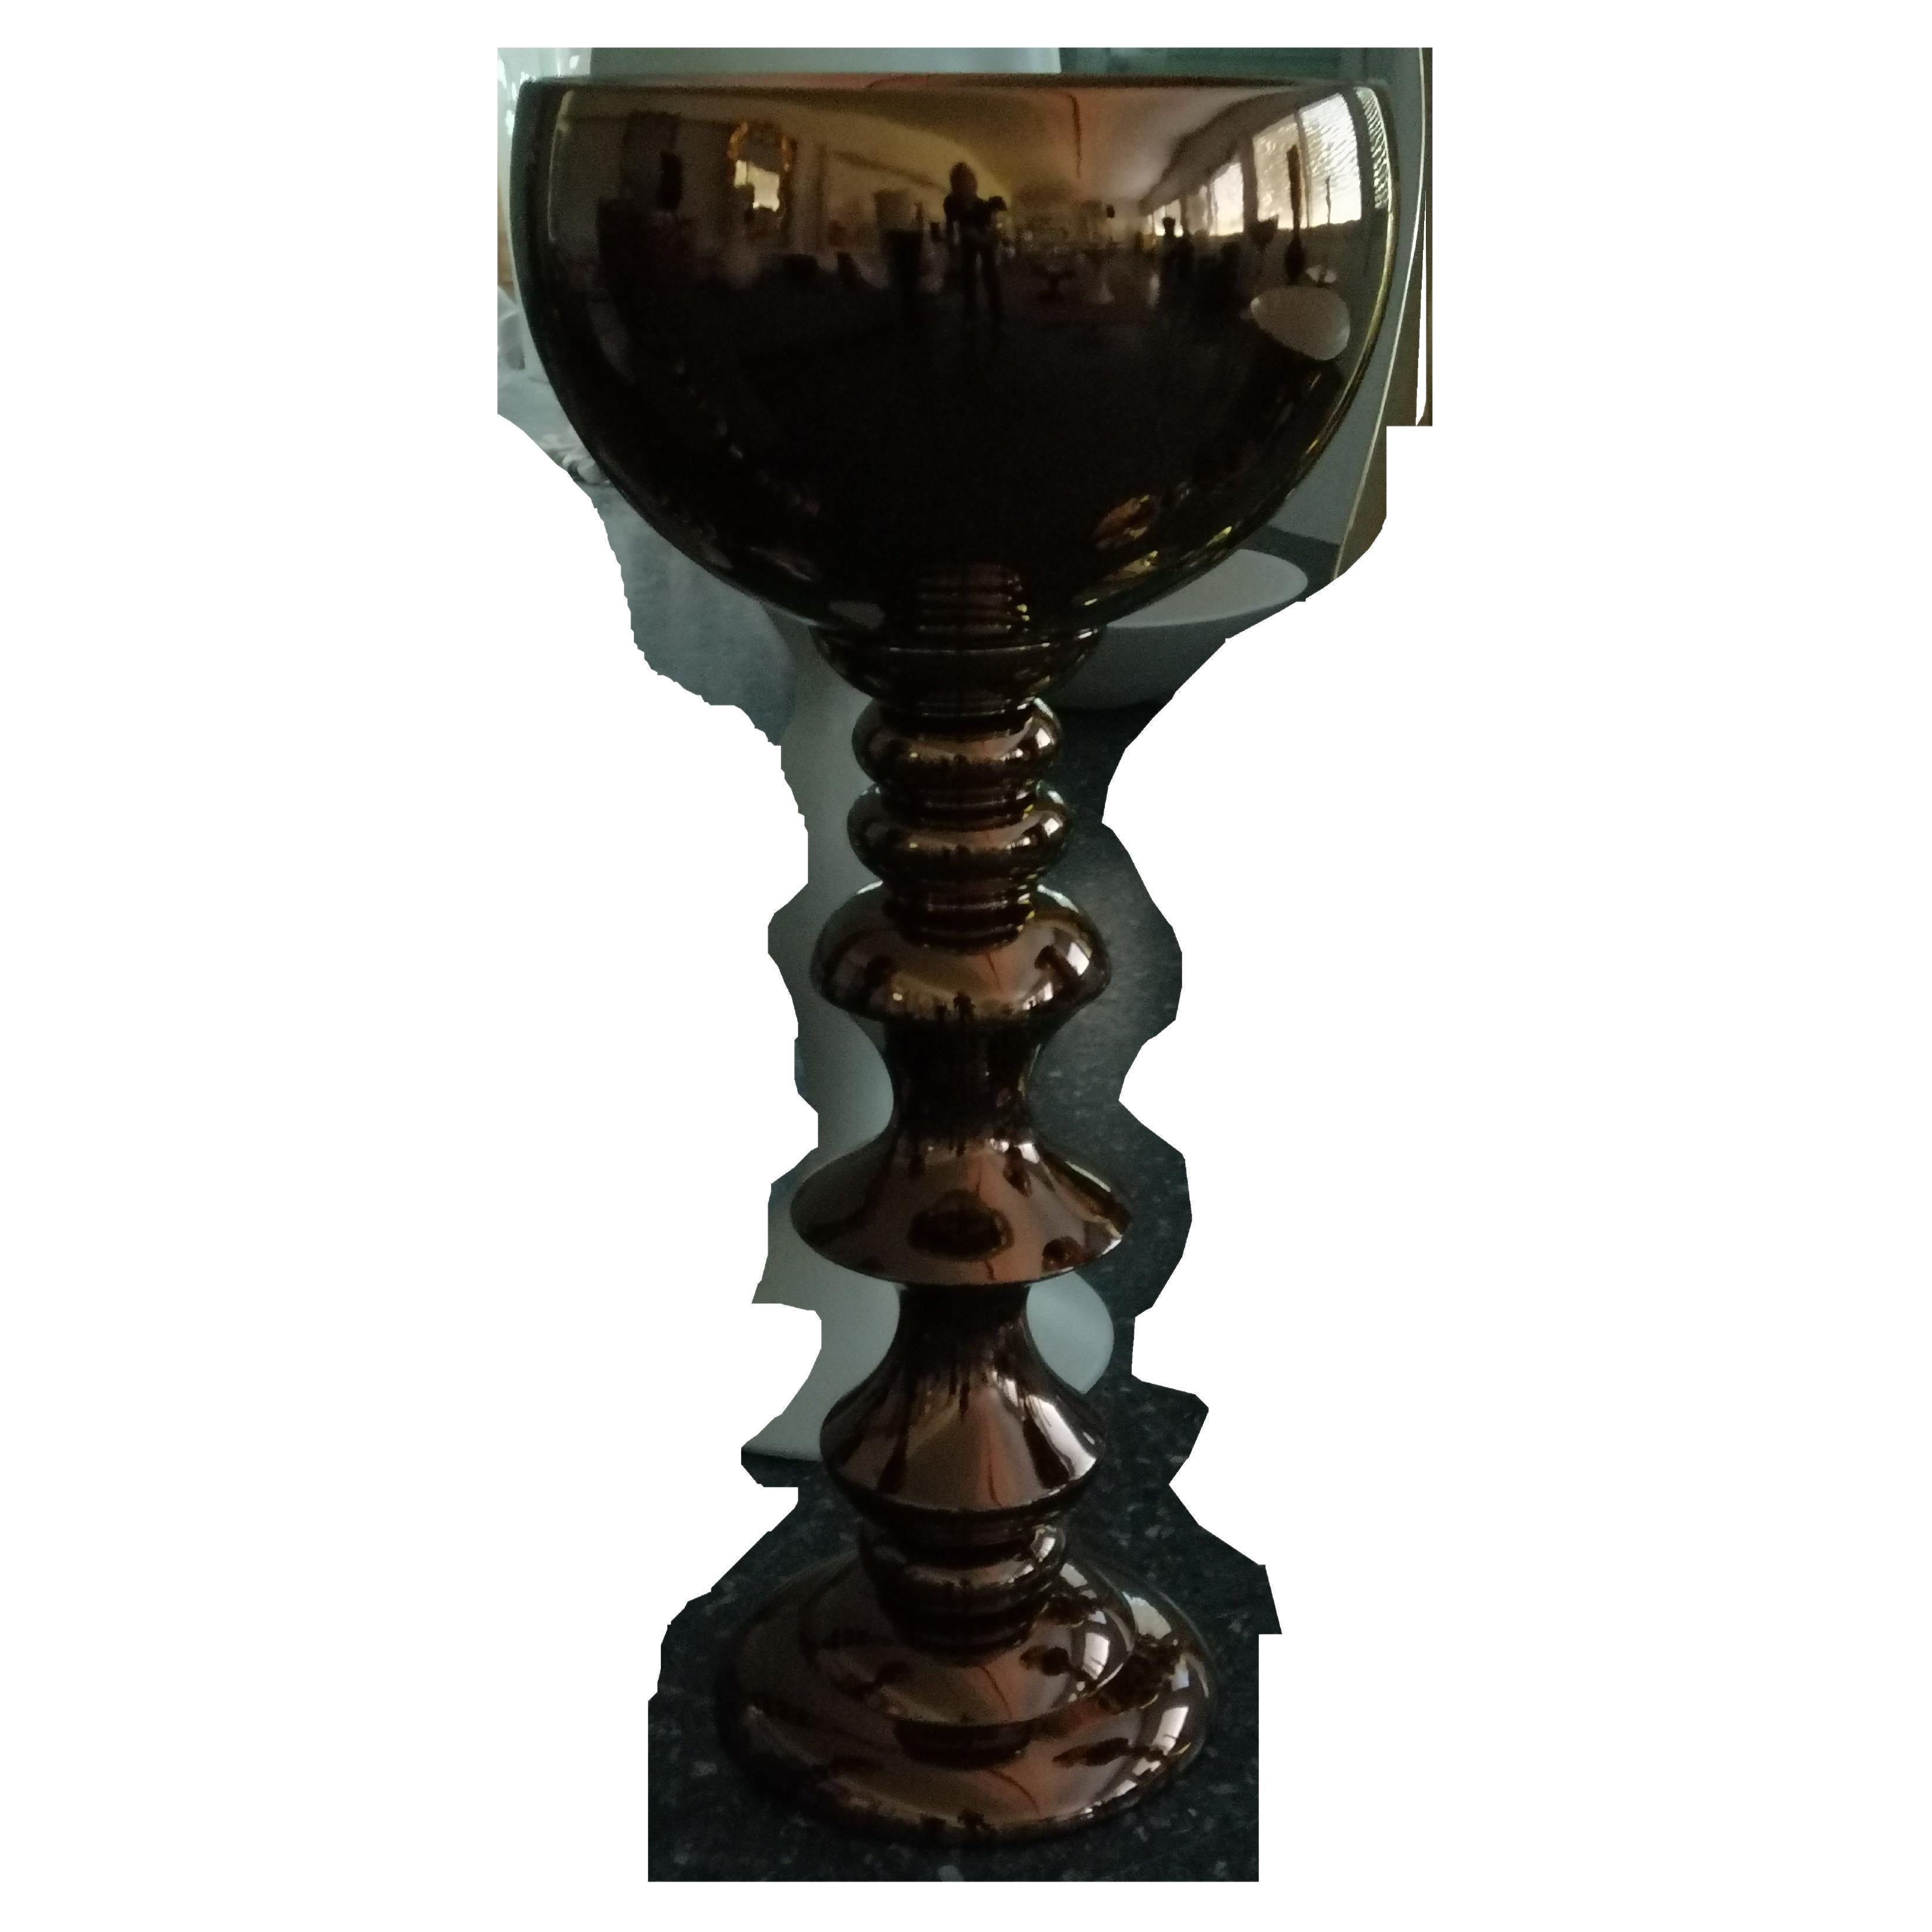 Ceramic Cup MIDA3
cod. CP003
handcrafted in bronze

measures: 
H. 105.0 cm.
Dm. 55.0 cm.